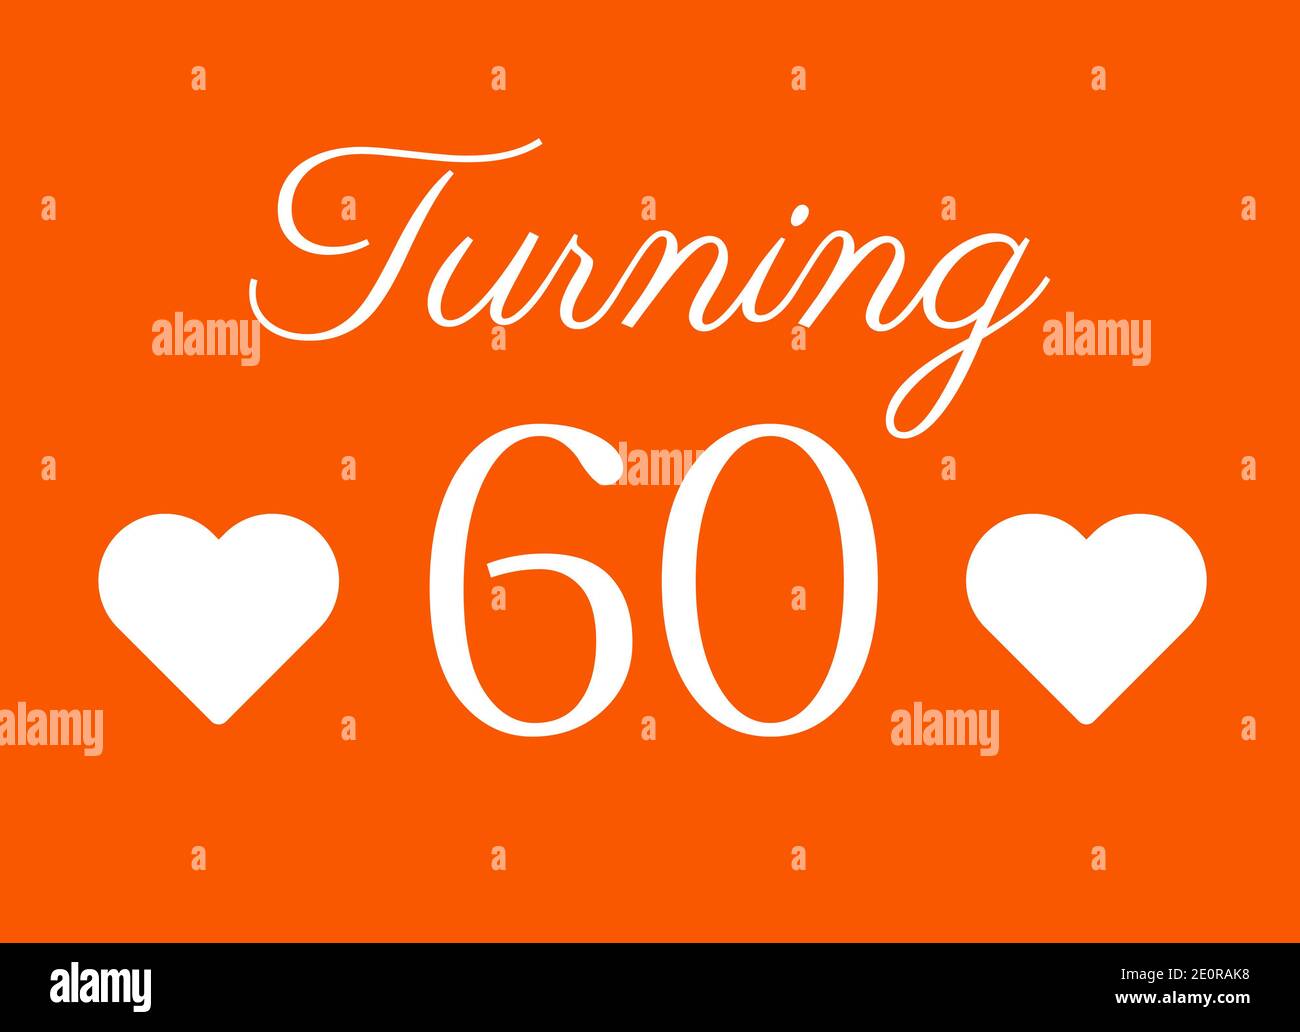 60th birthday card wishes illustration. Stock Photo